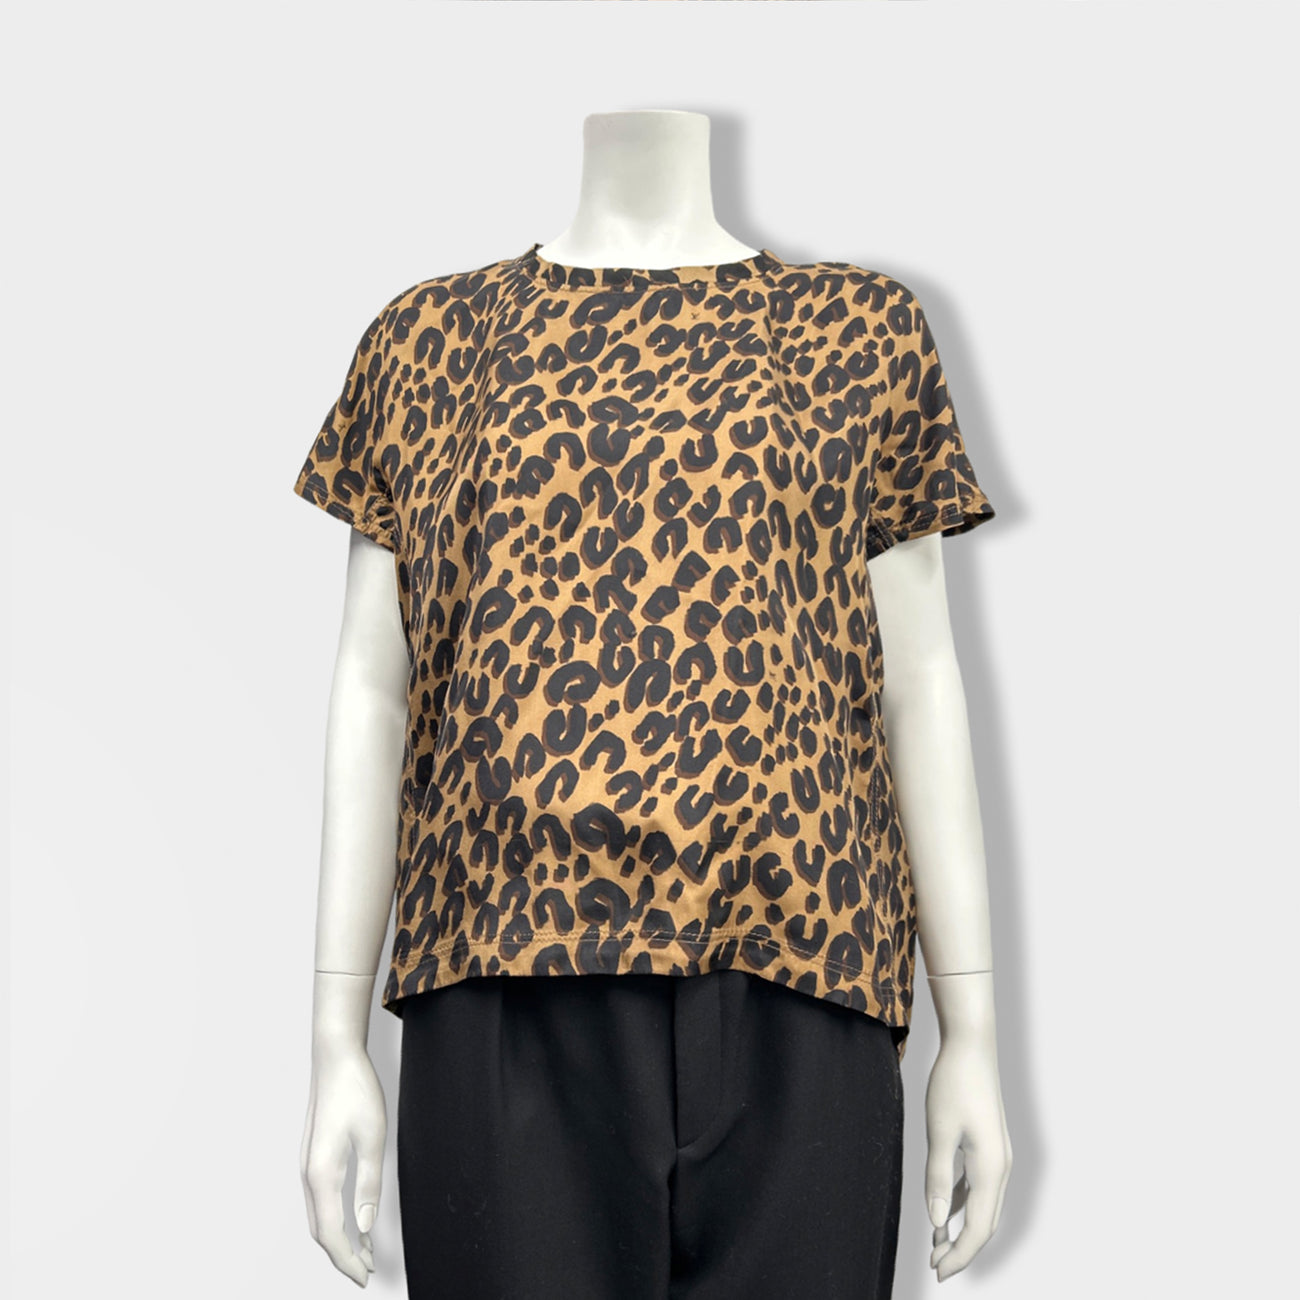 Dripping LV Leopard T-shirt